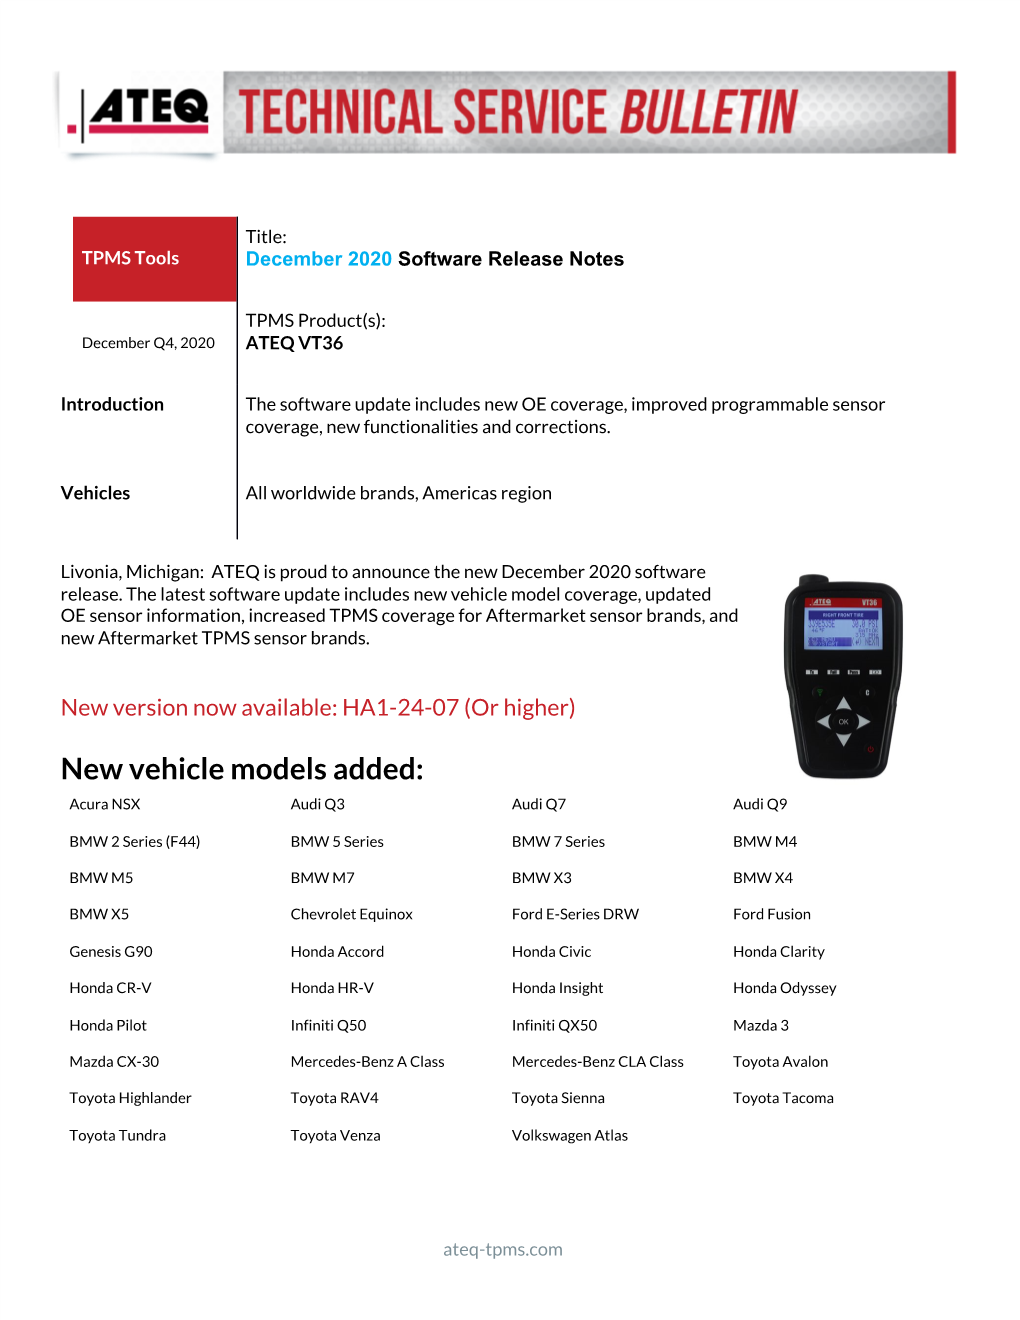 New Vehicle Models Added: Acura NSX Audi Q3 Audi Q7 Audi Q9